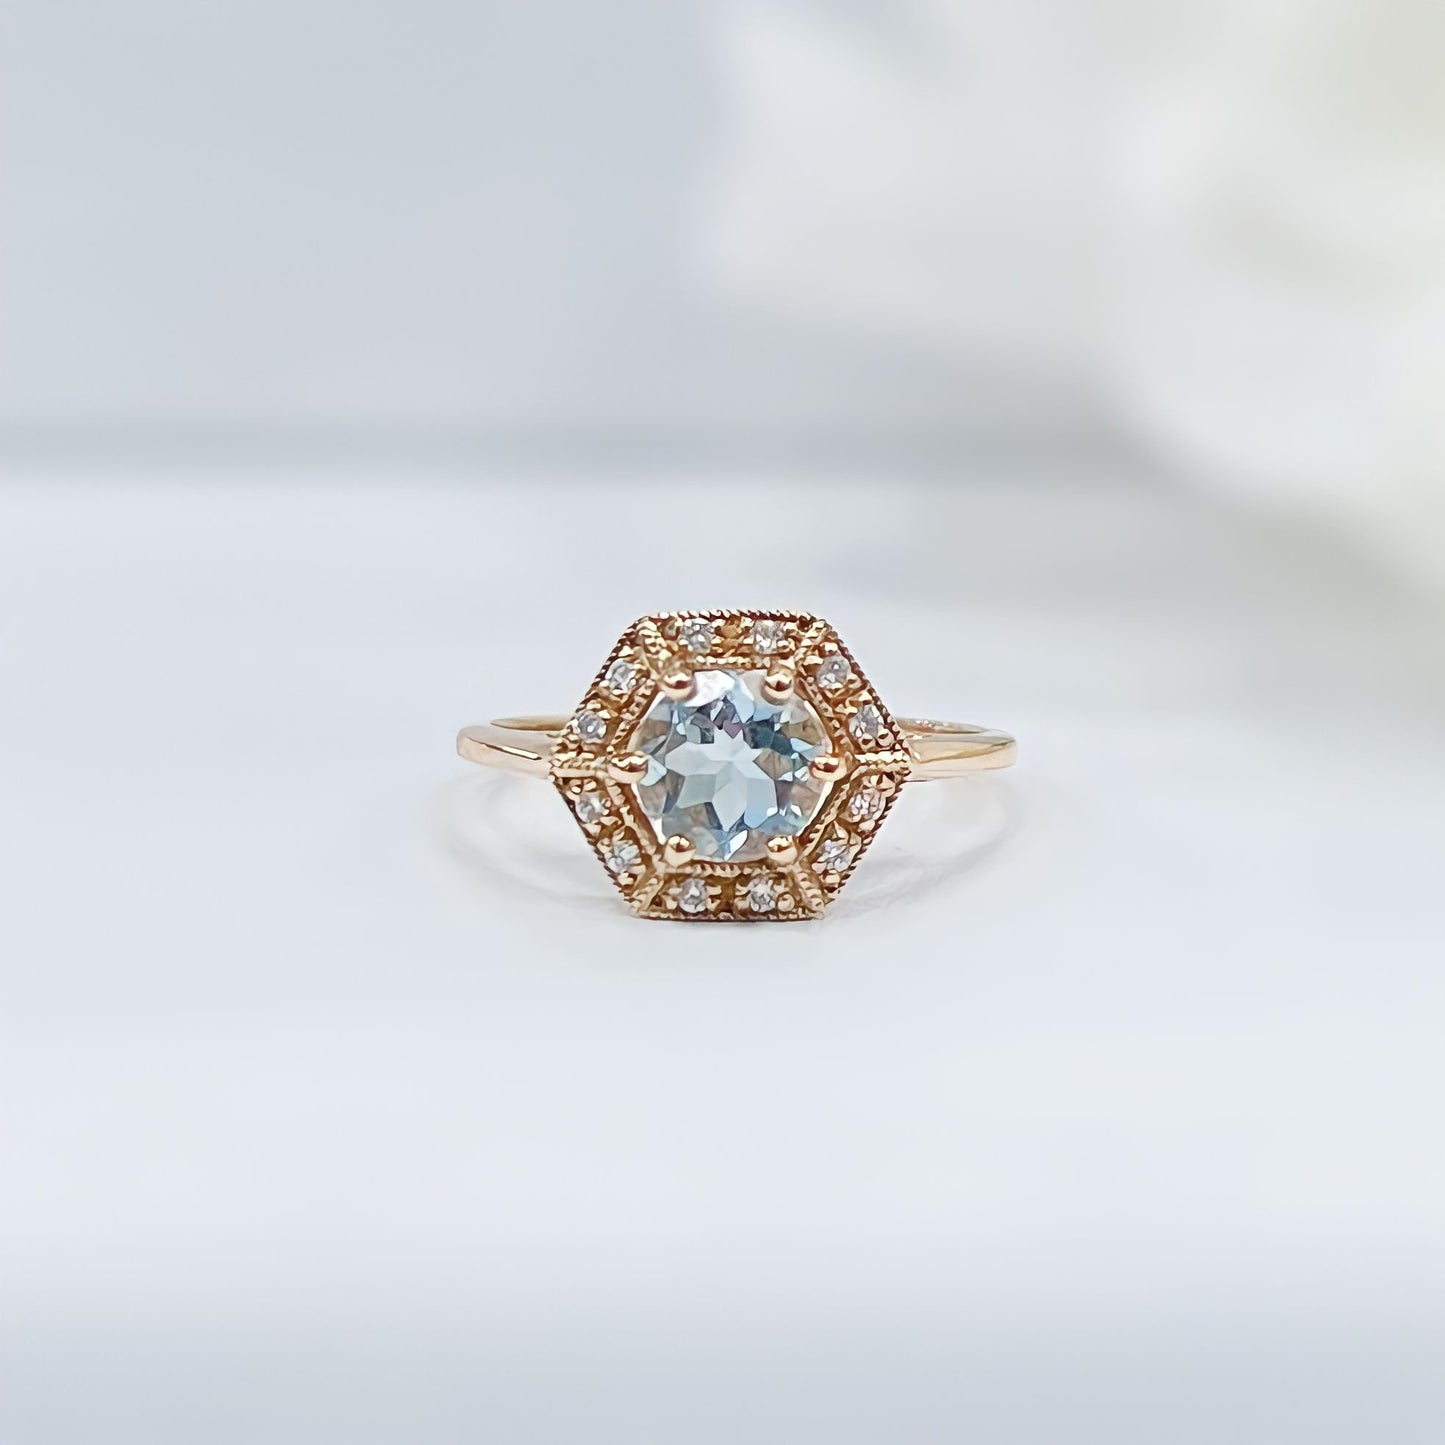 Art Deco Inspired 9ct Yellow Gold Aquamarine and Diamond Ring - Size M 1/2